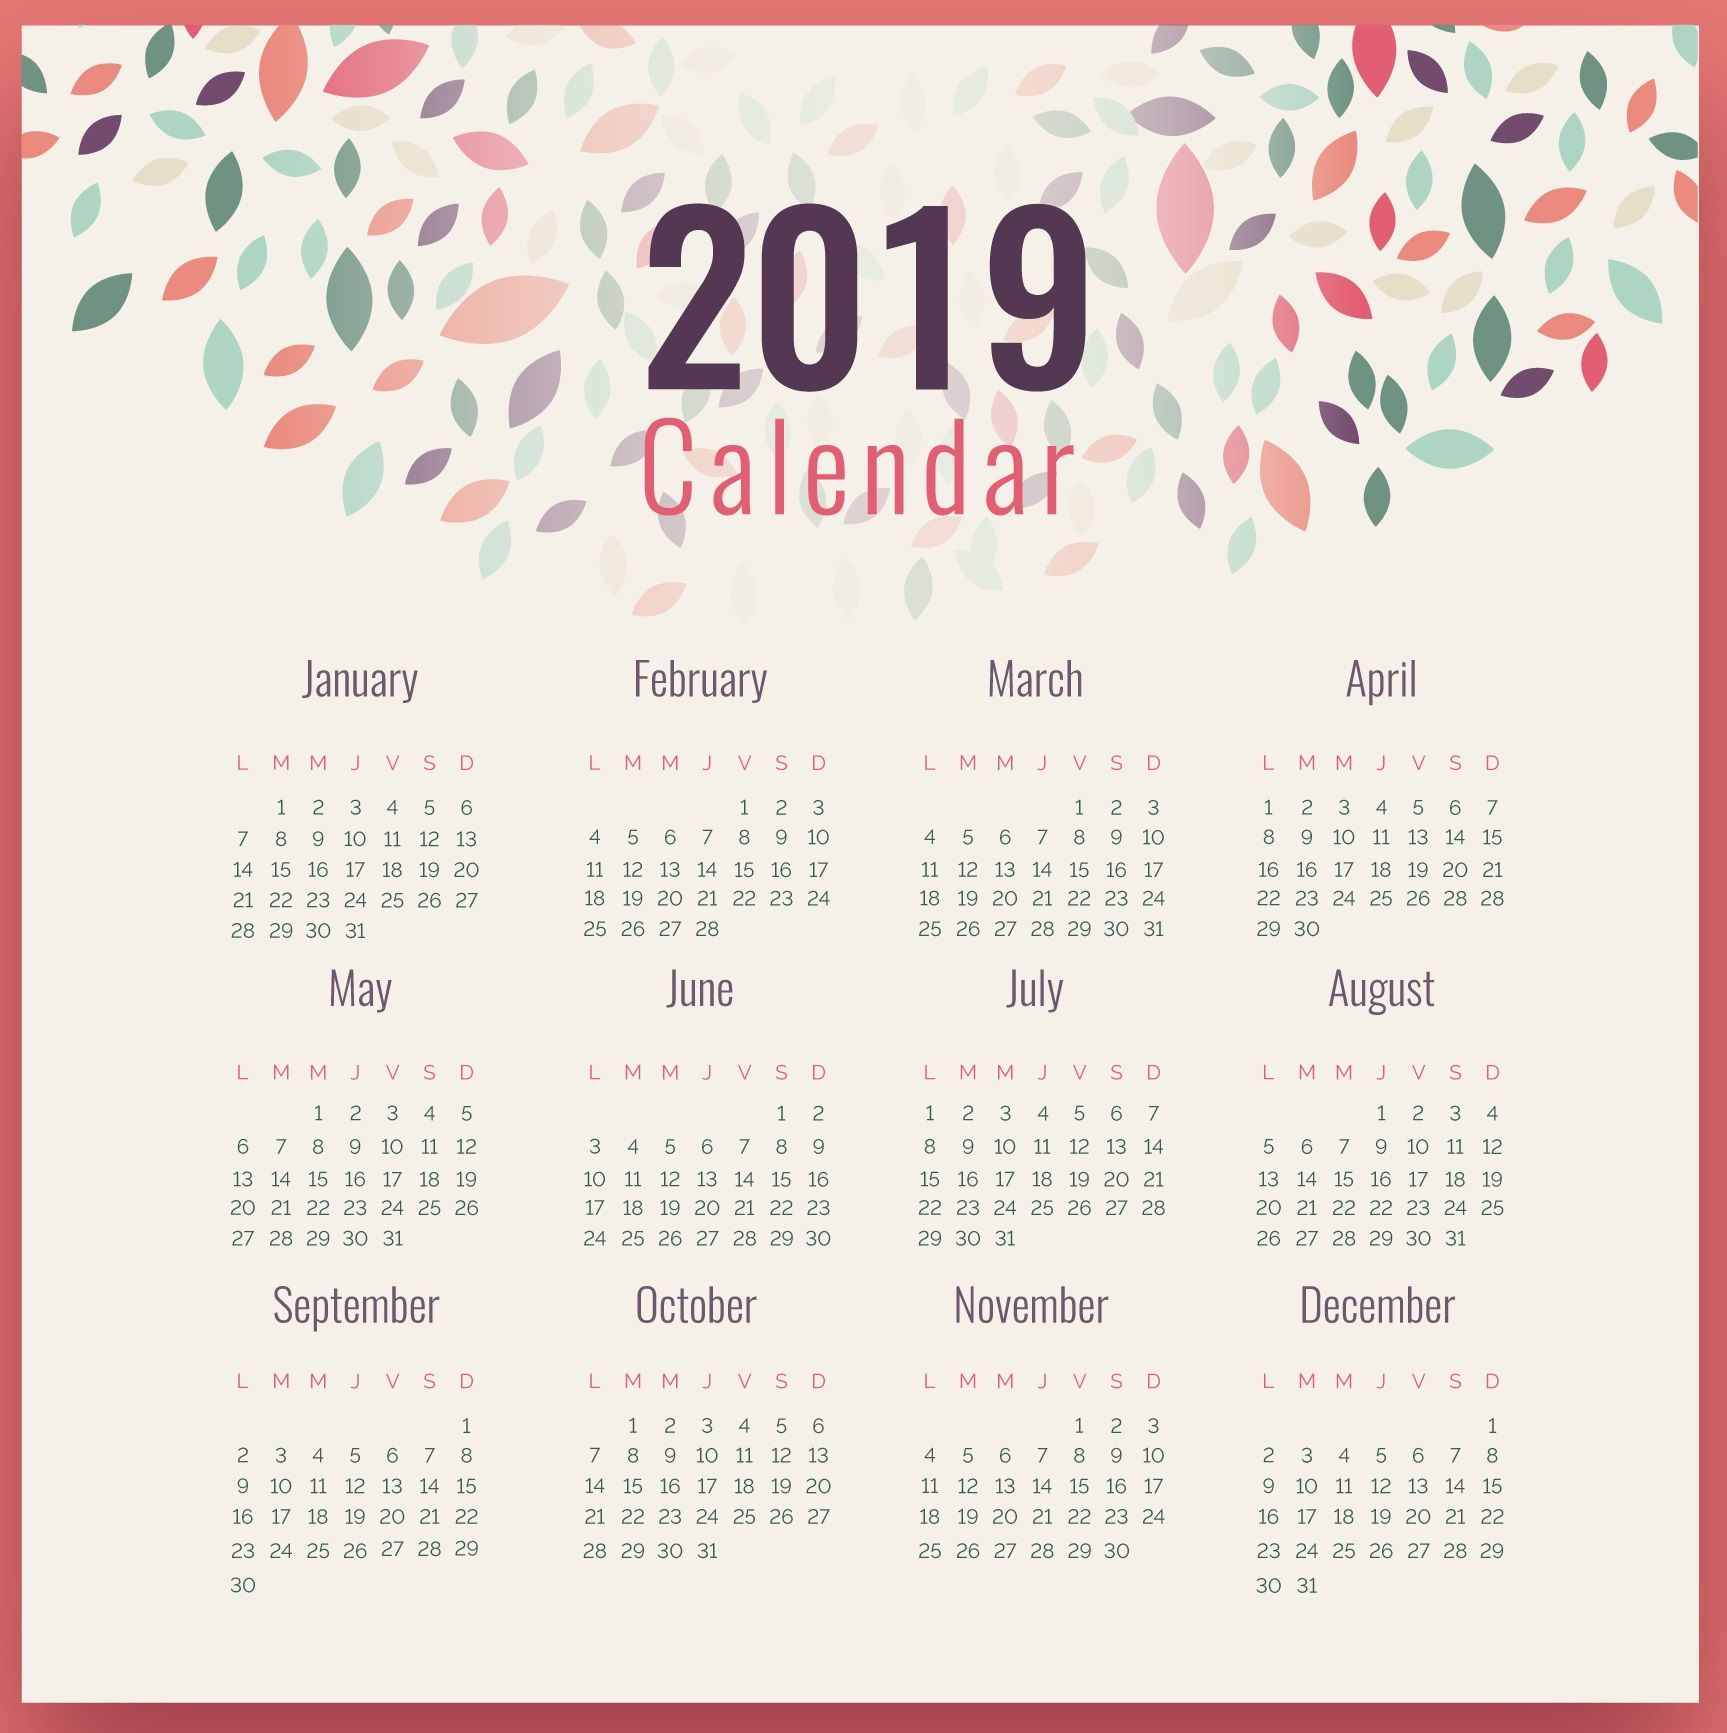 2019 Calendar Photo Frame Design | Calendar Design, Free with regard to At A Glance Wall Calendar Holder